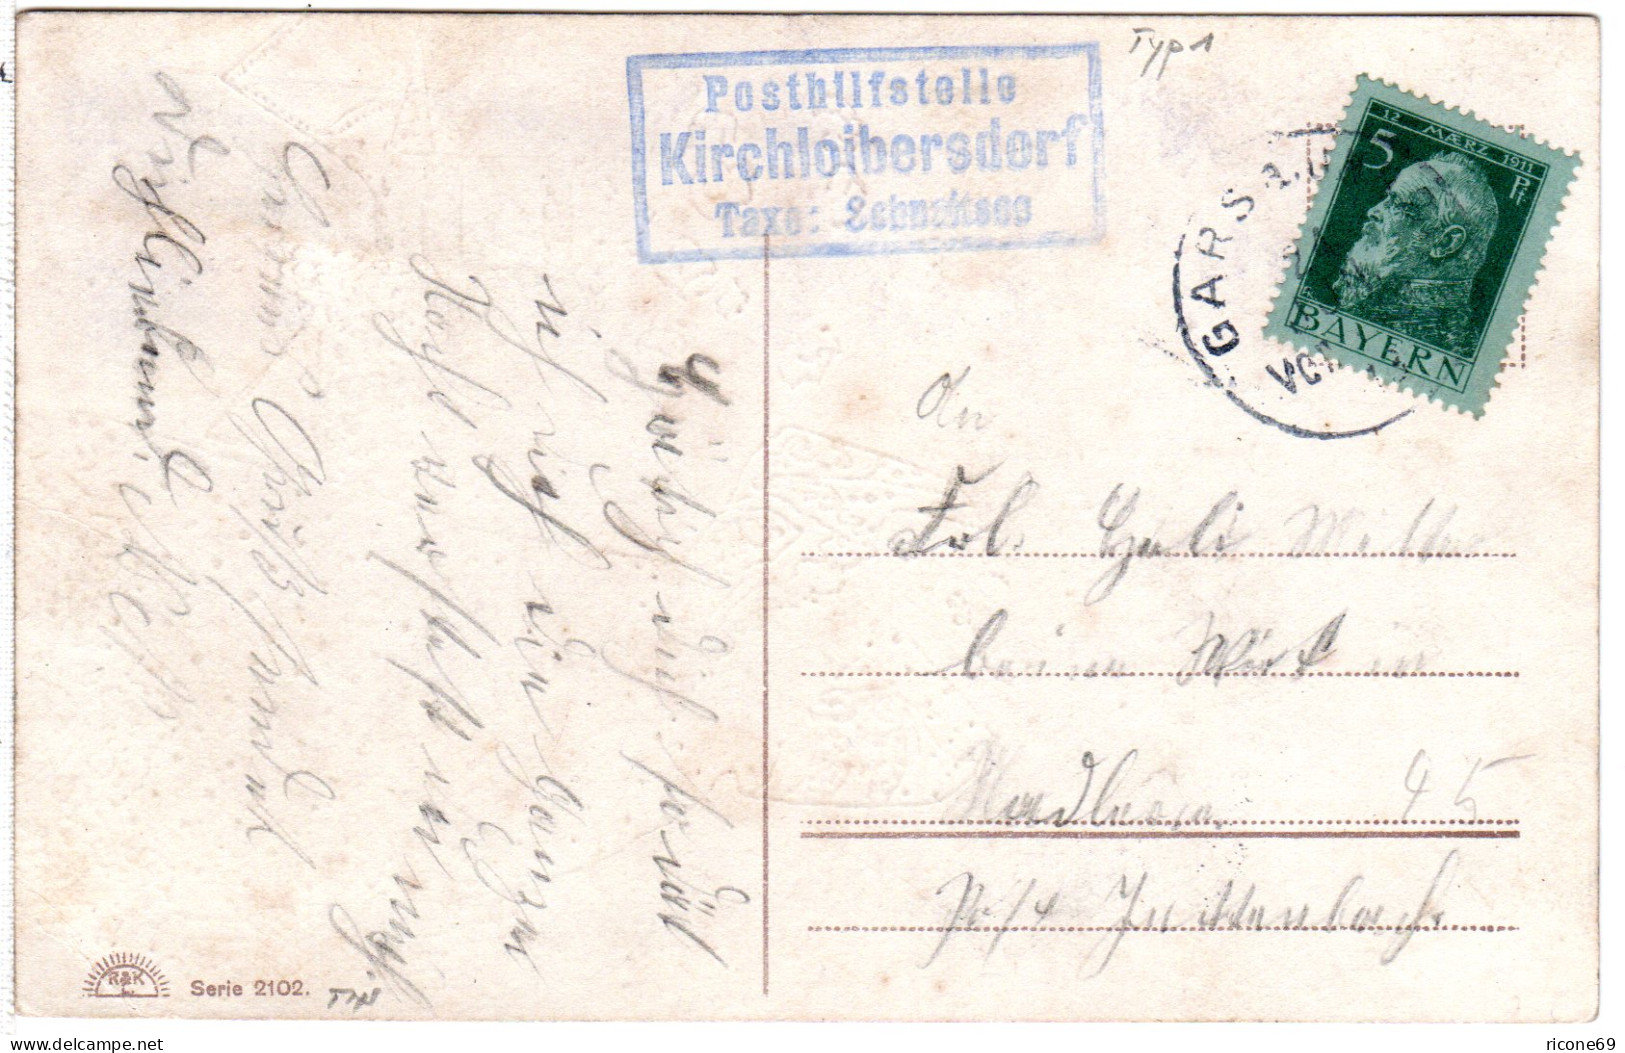 Bayern 1913, Posthilfstelle KIRCHLOIBERSDORF Taxe Schnaitsee Auf Karte M. 5 Pf. - Covers & Documents